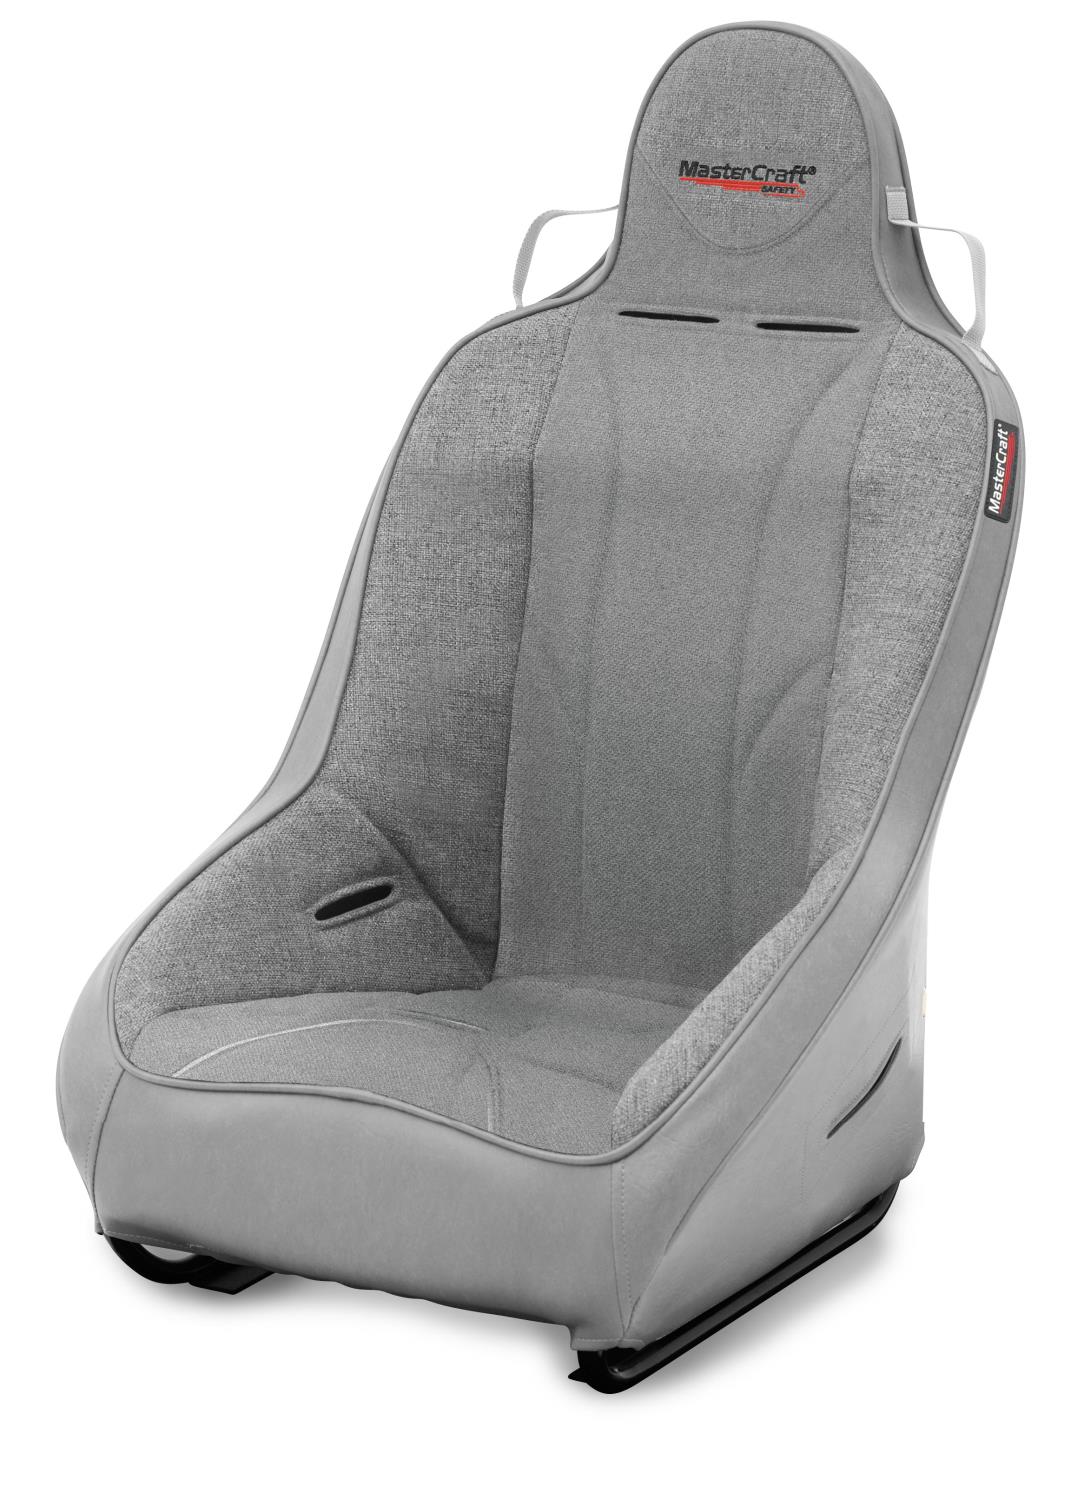 560019 Standard PROSeat w/Fixed Headrest, Smoke Gray with